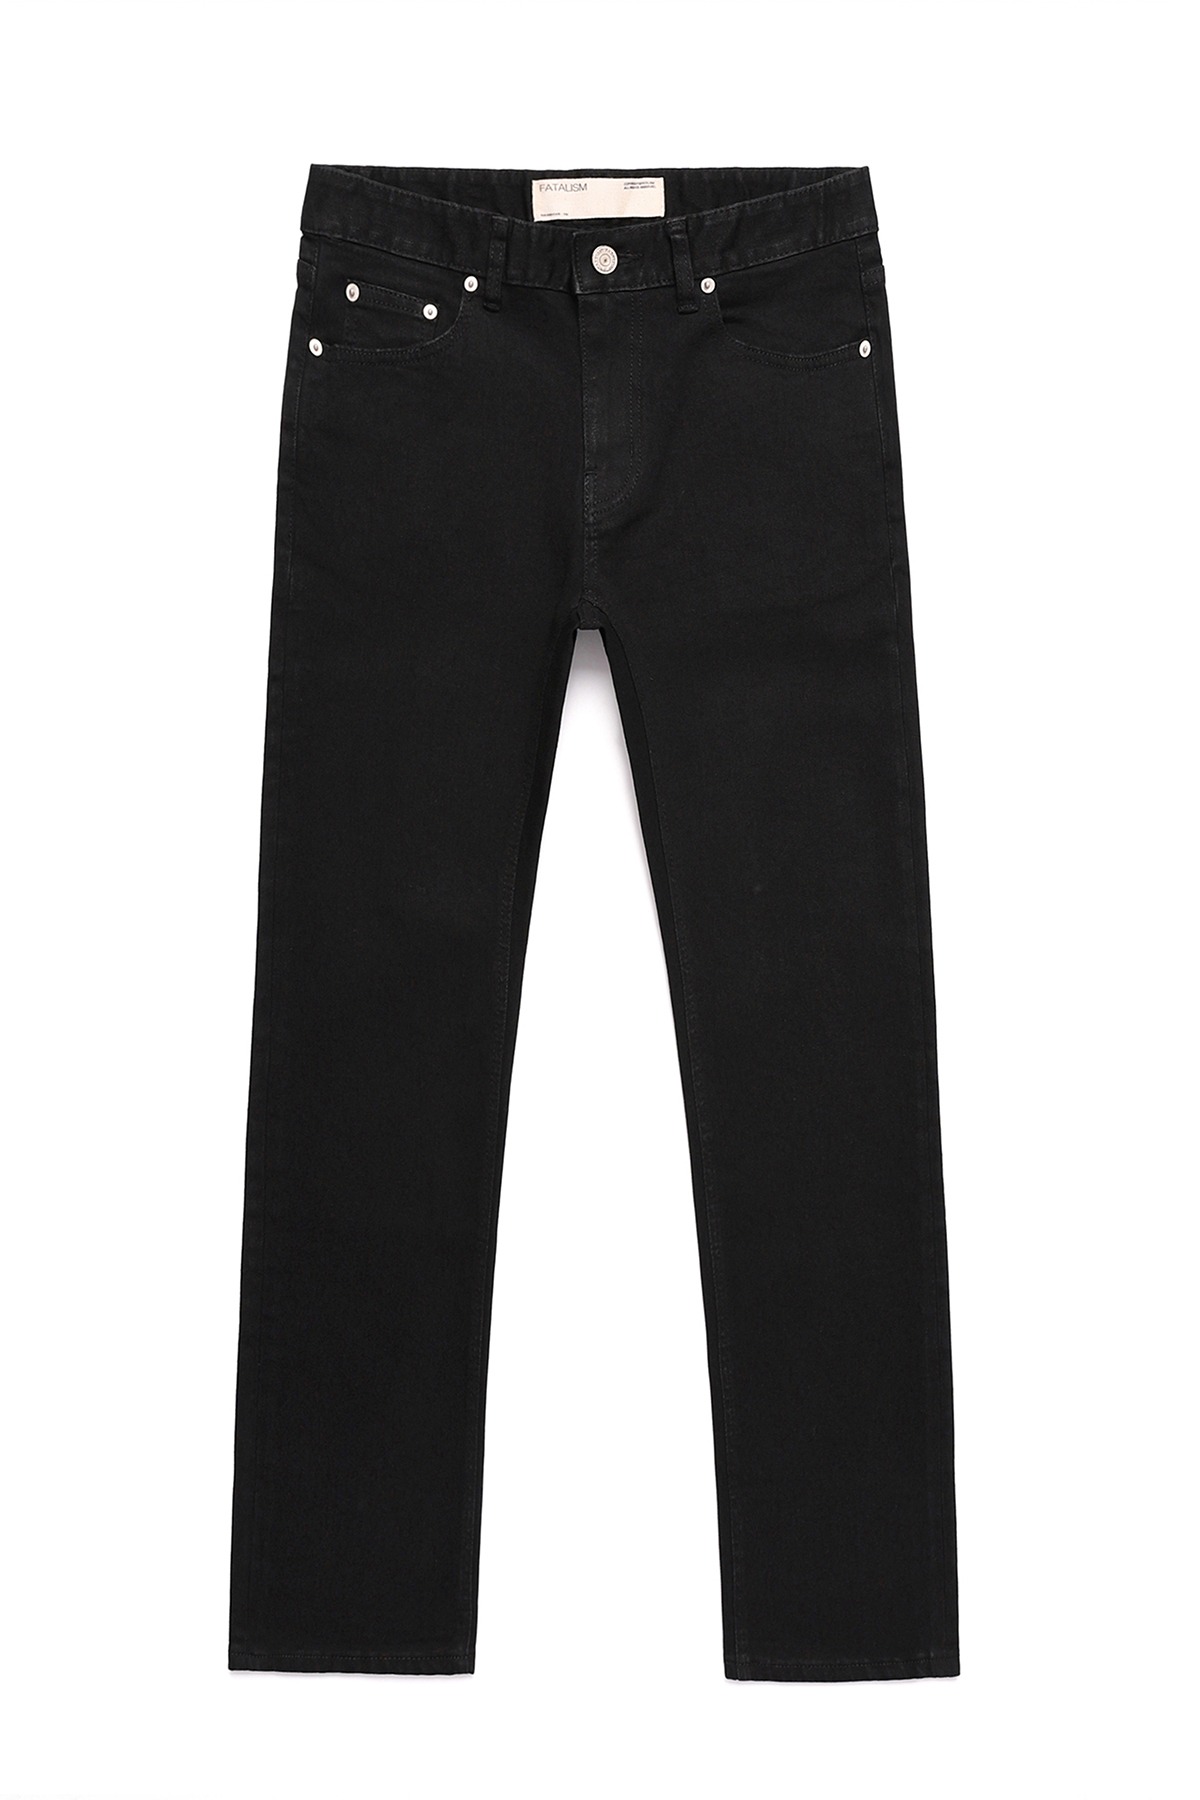 #0069 black crop jeans